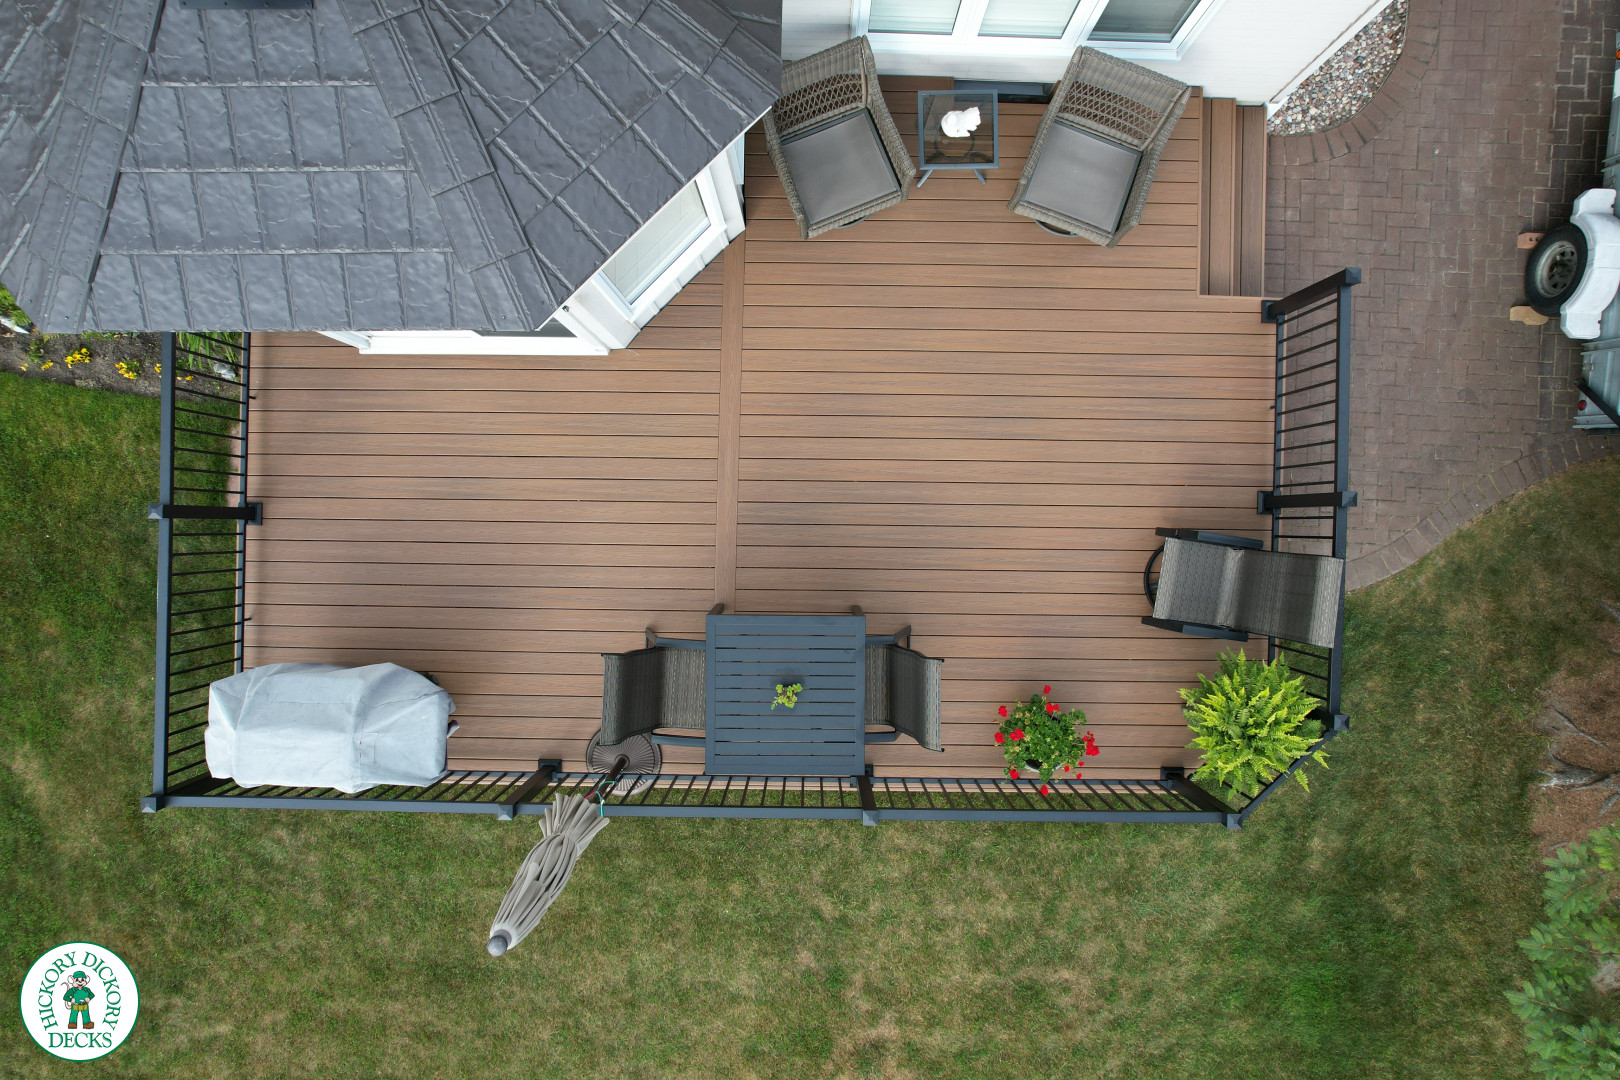 LArge brown fiberon deck with black aluminum railings.